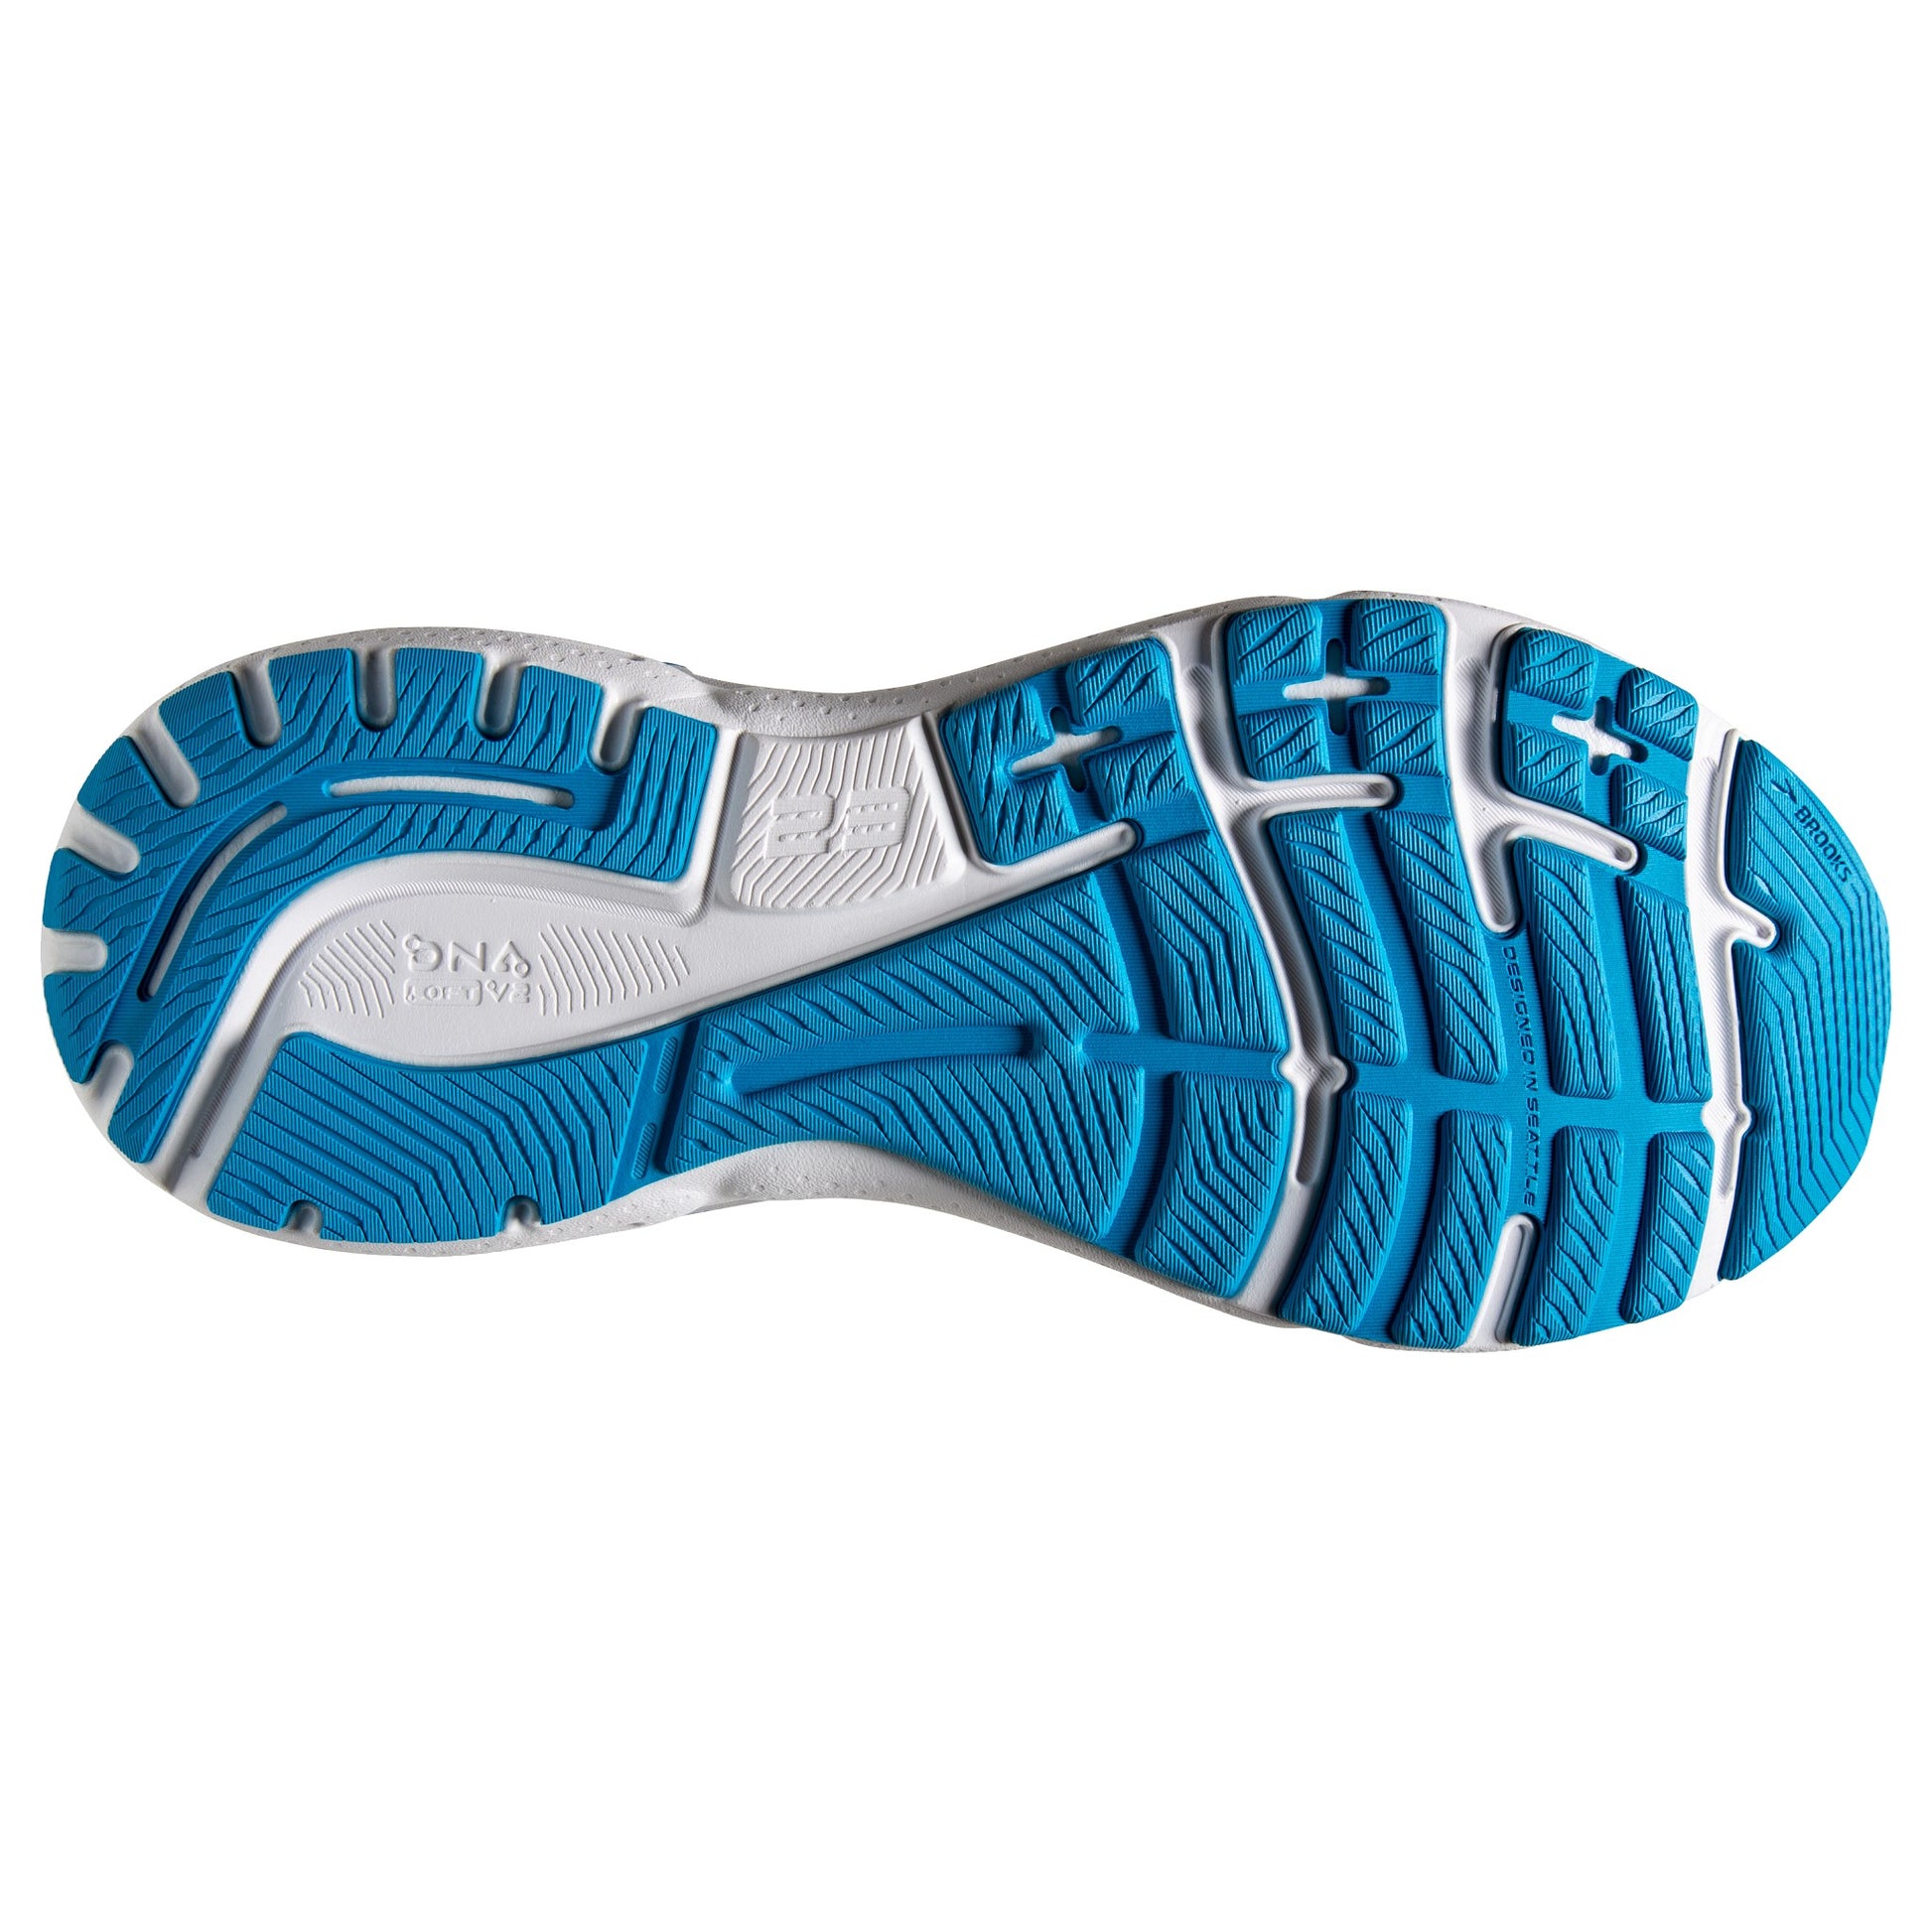 Brooks Adrenaline GTS 23 men's wide fit stability shoe, black, green, blue